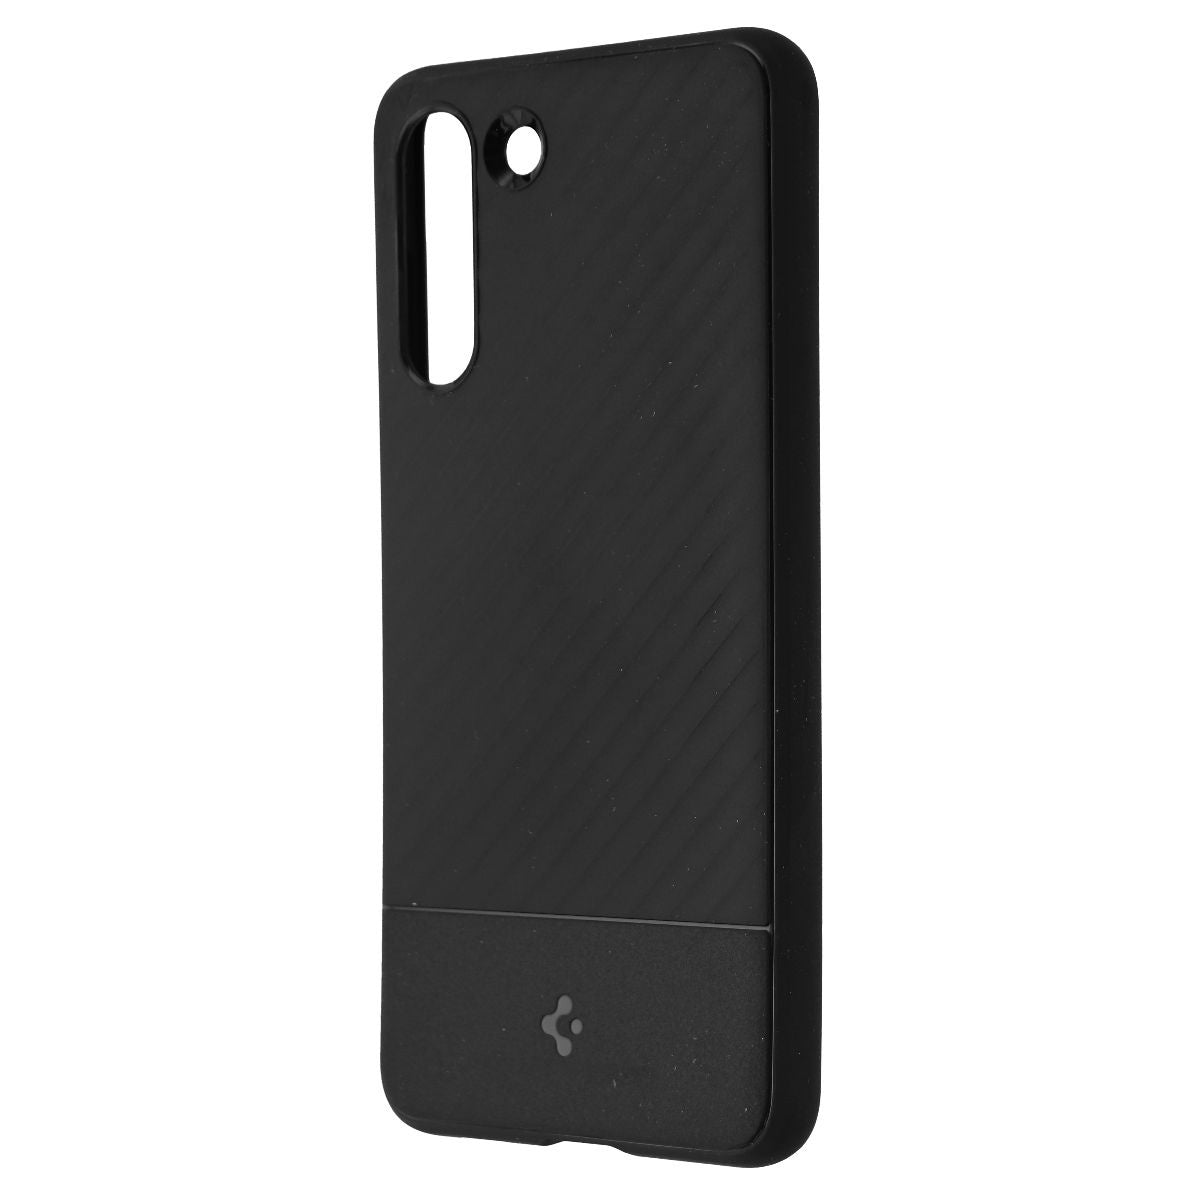 Spigen Core Armor Designed for Galaxy S21 FE Case (2021) - Matte Black Cell Phone - Cases, Covers & Skins Spigen    - Simple Cell Bulk Wholesale Pricing - USA Seller